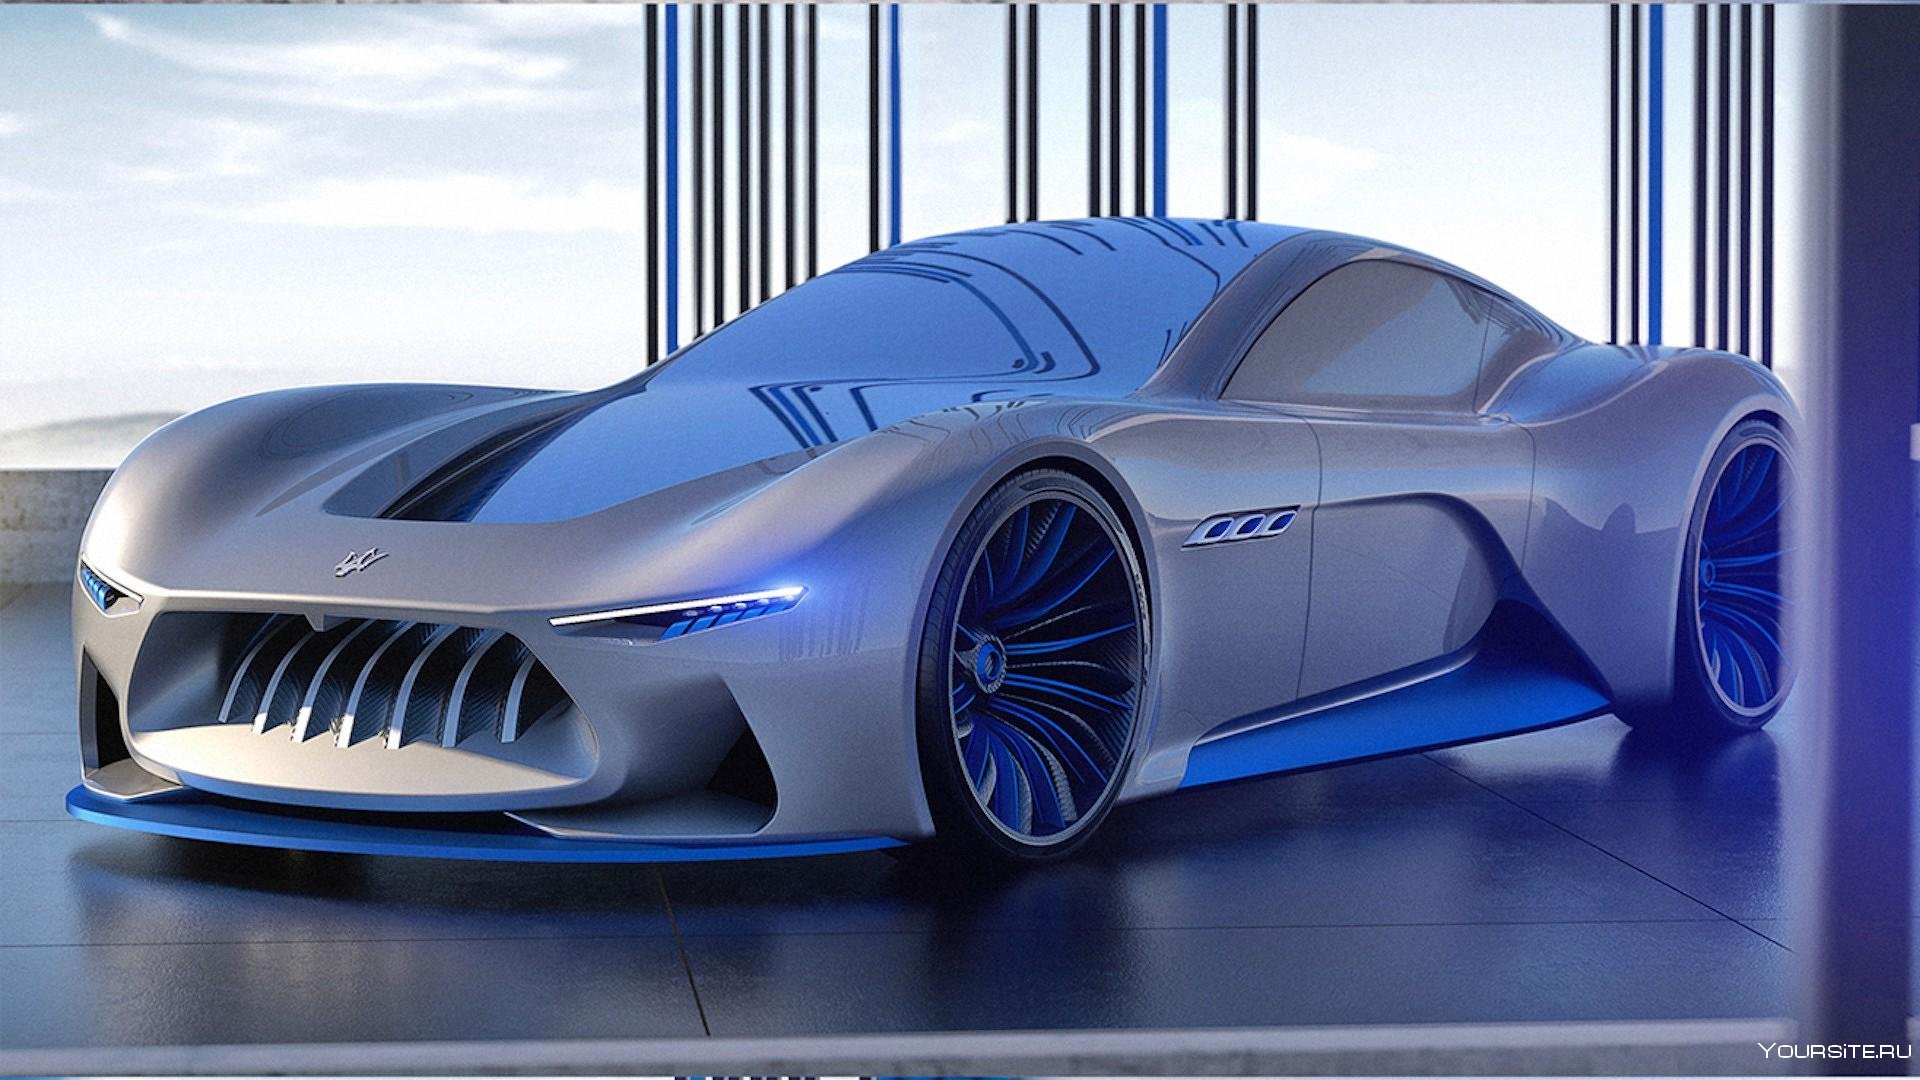 Bugatti 12. Мазератти концепт. Шевроле FNR концепт 2020. Мазерати концепт кар. Суперкар Мазерати 2020.